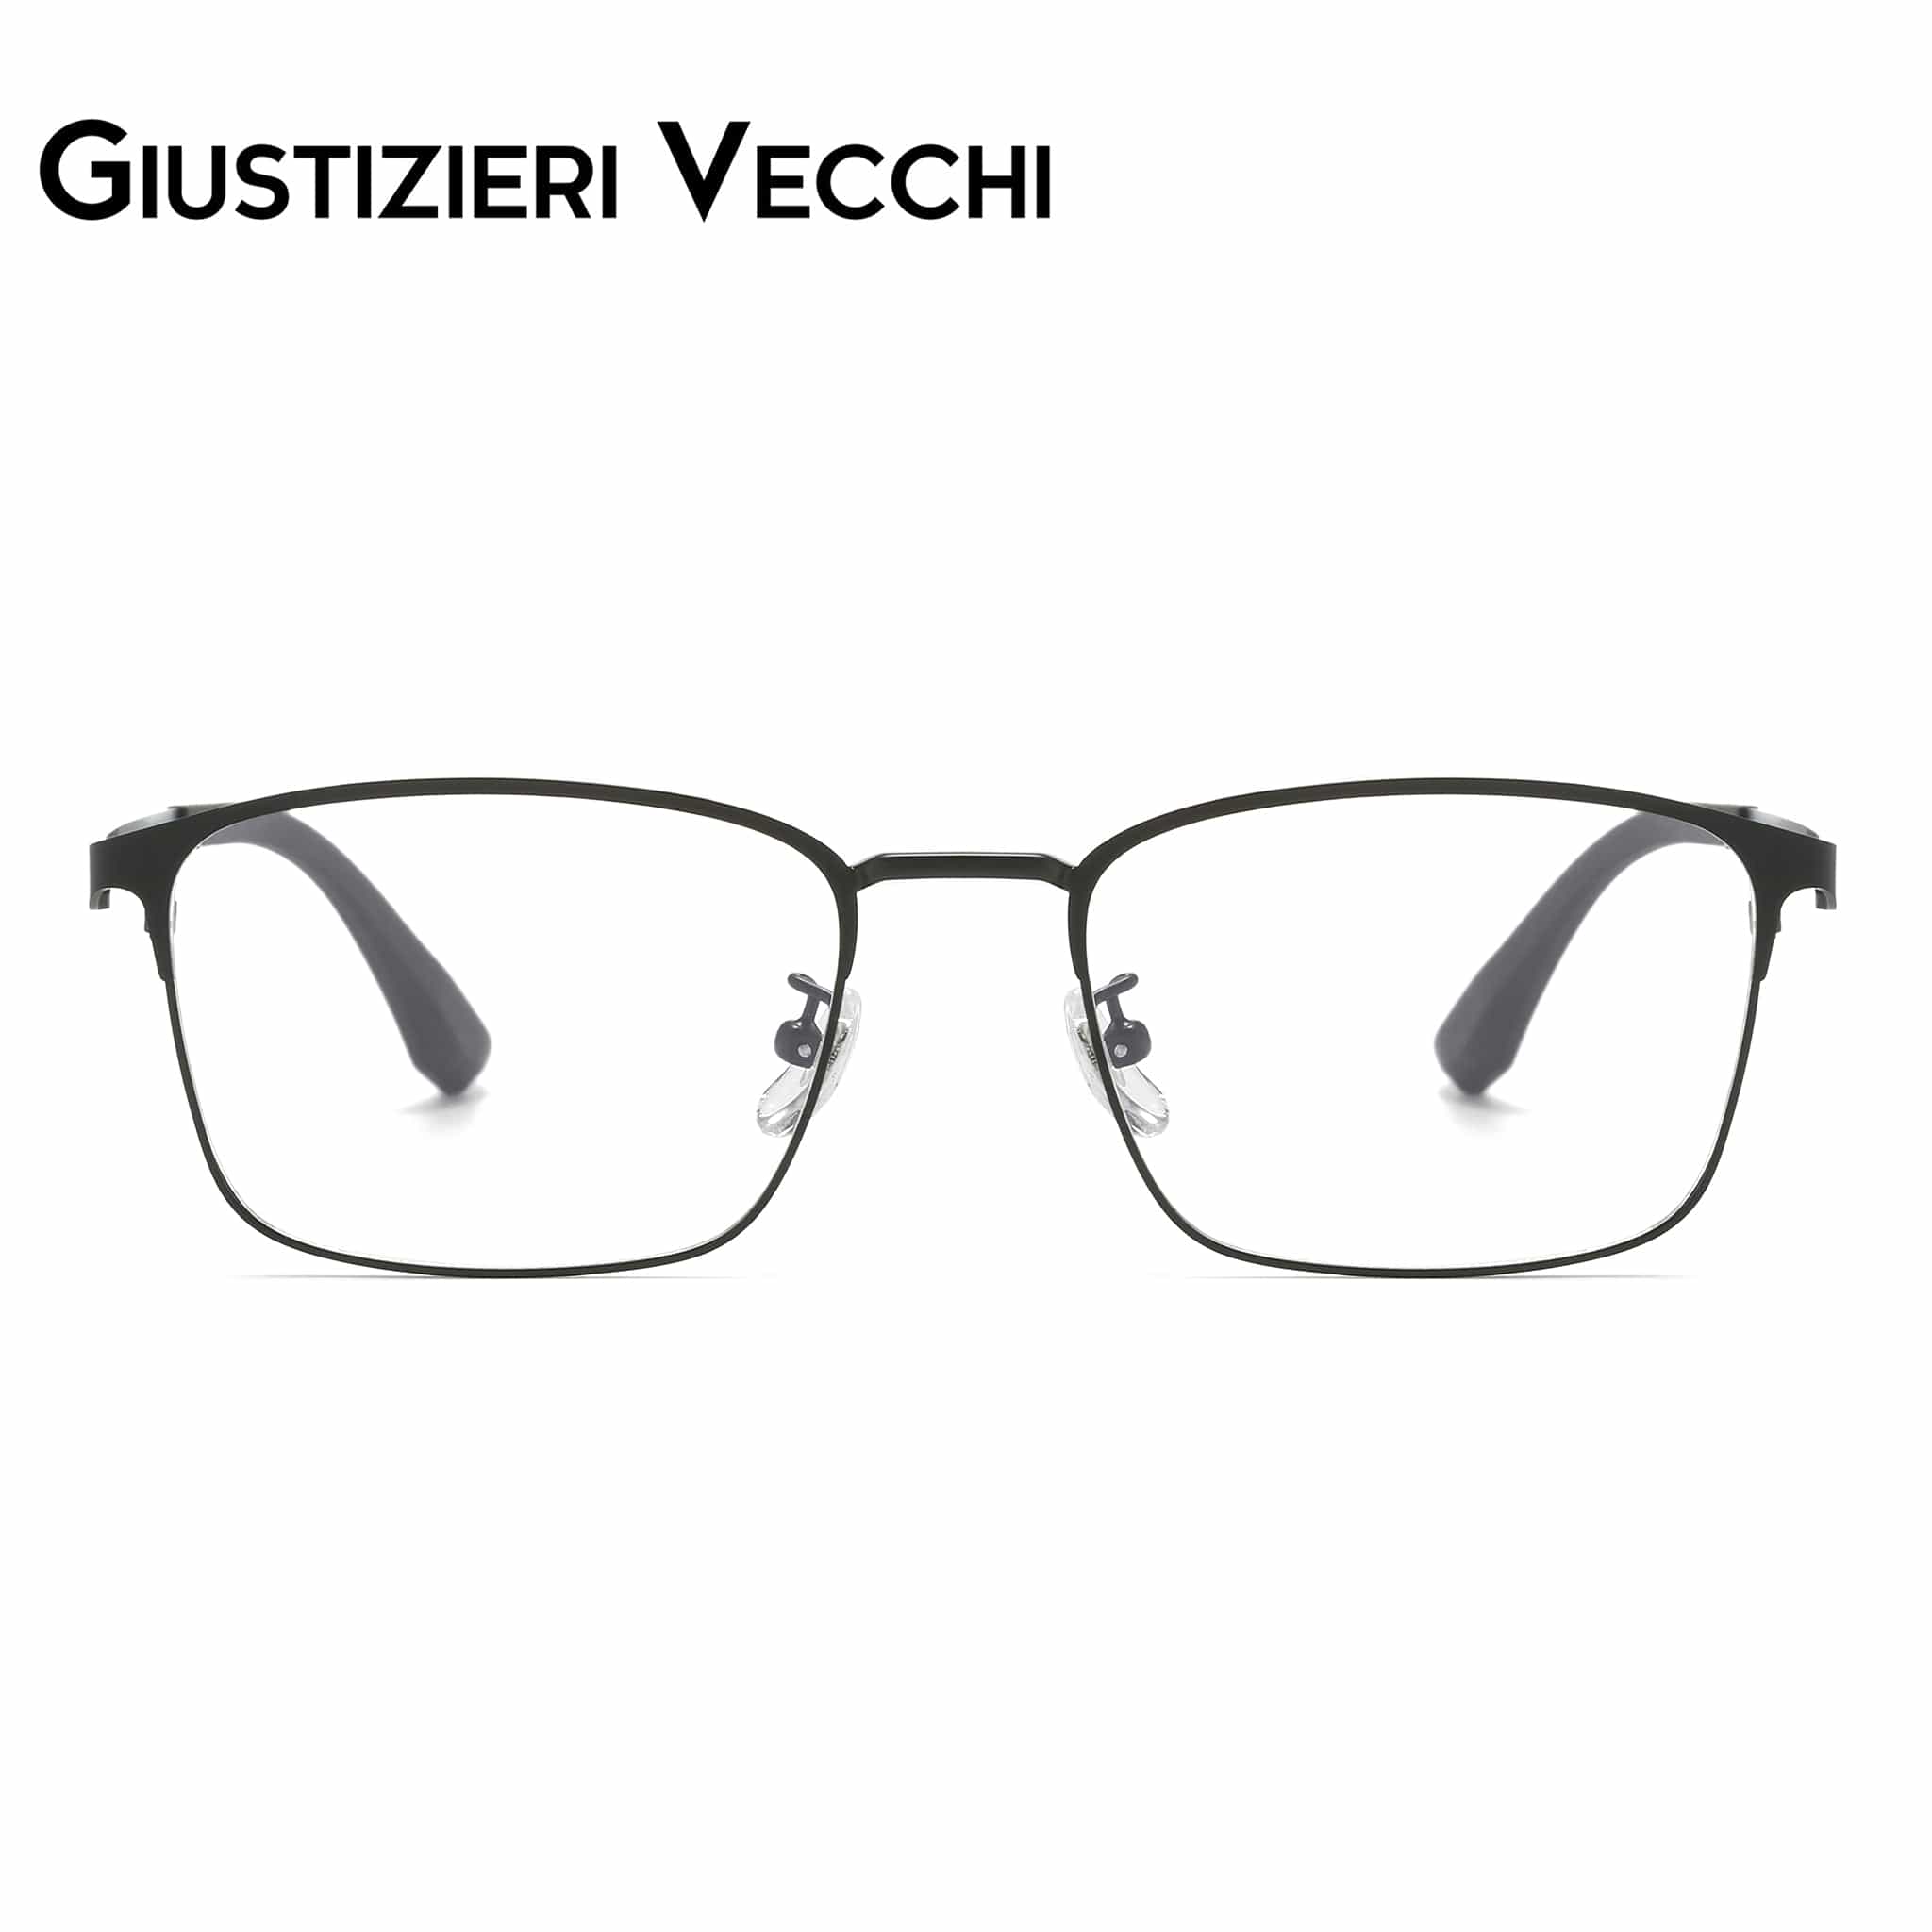 GIUSTIZIERI VECCHI Eyeglasses Black / Medium Firestorm Uno